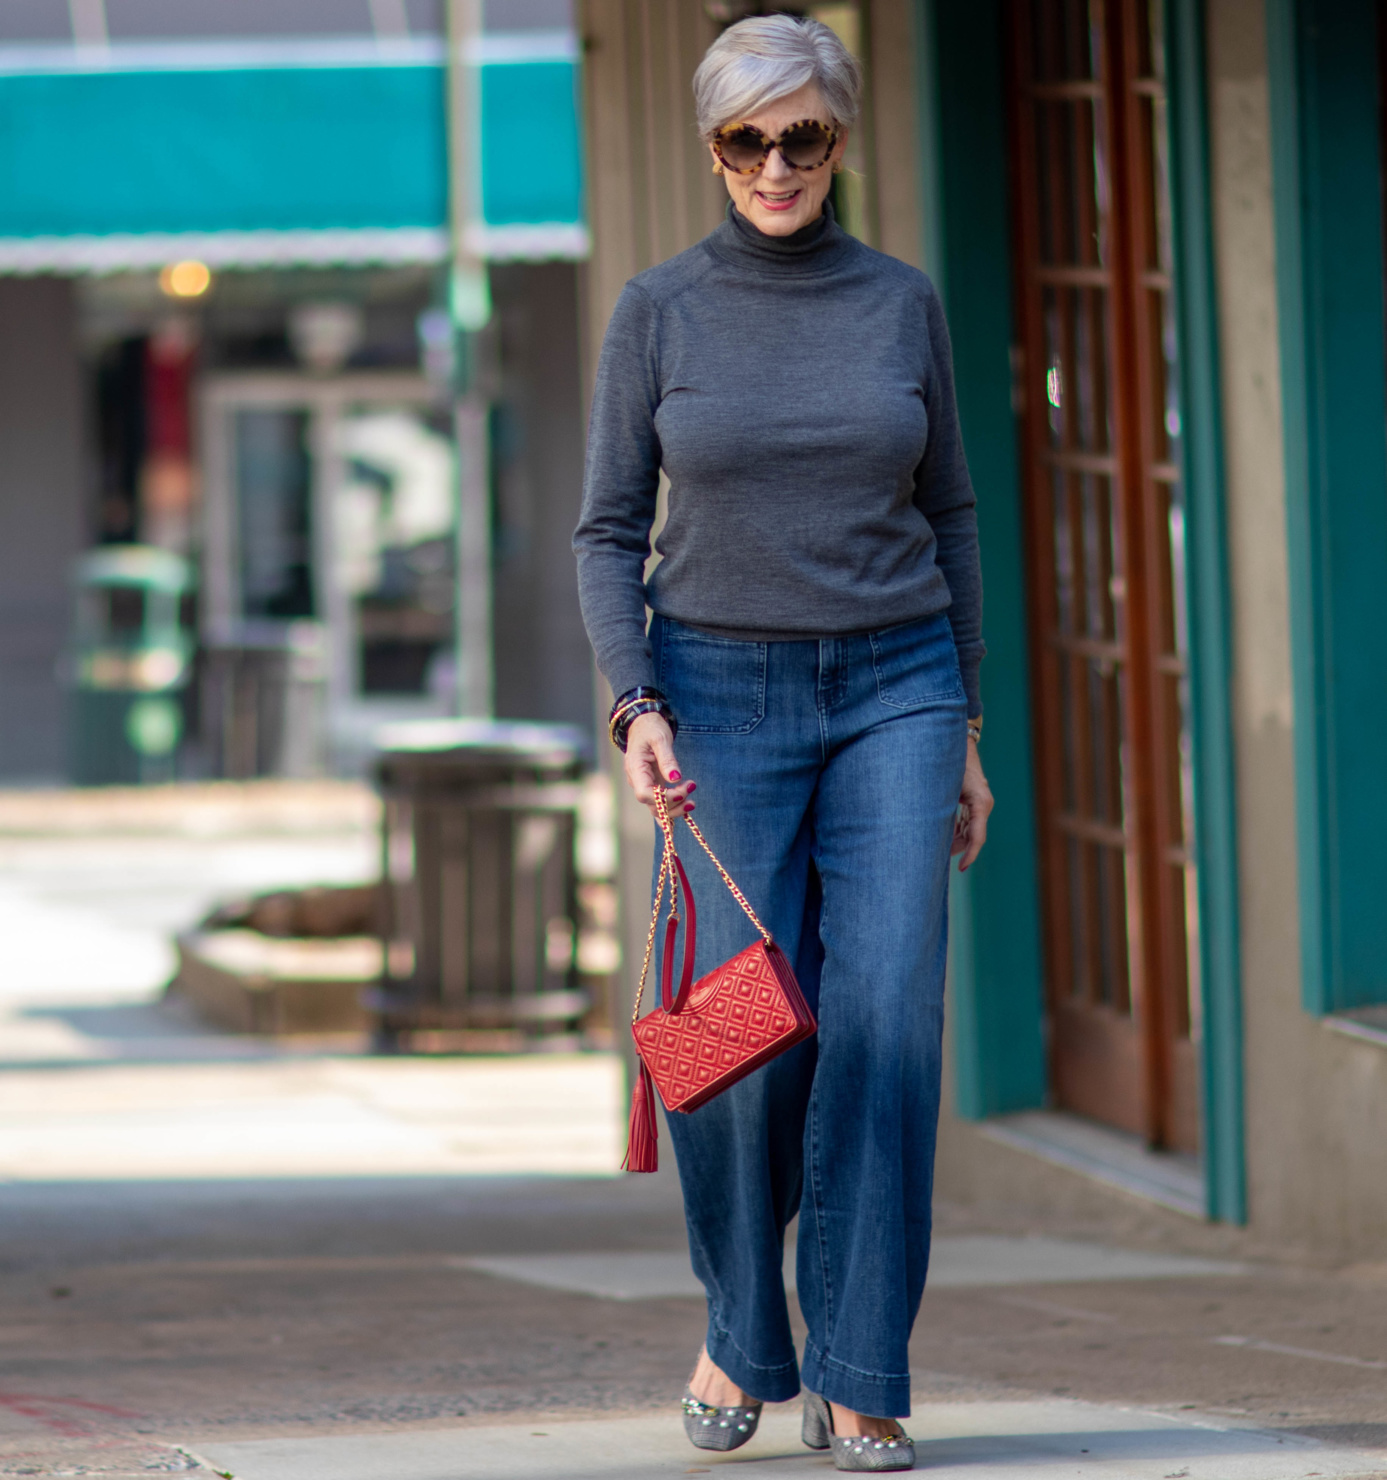 wide leg jeans, gray turtleneck, red handbag